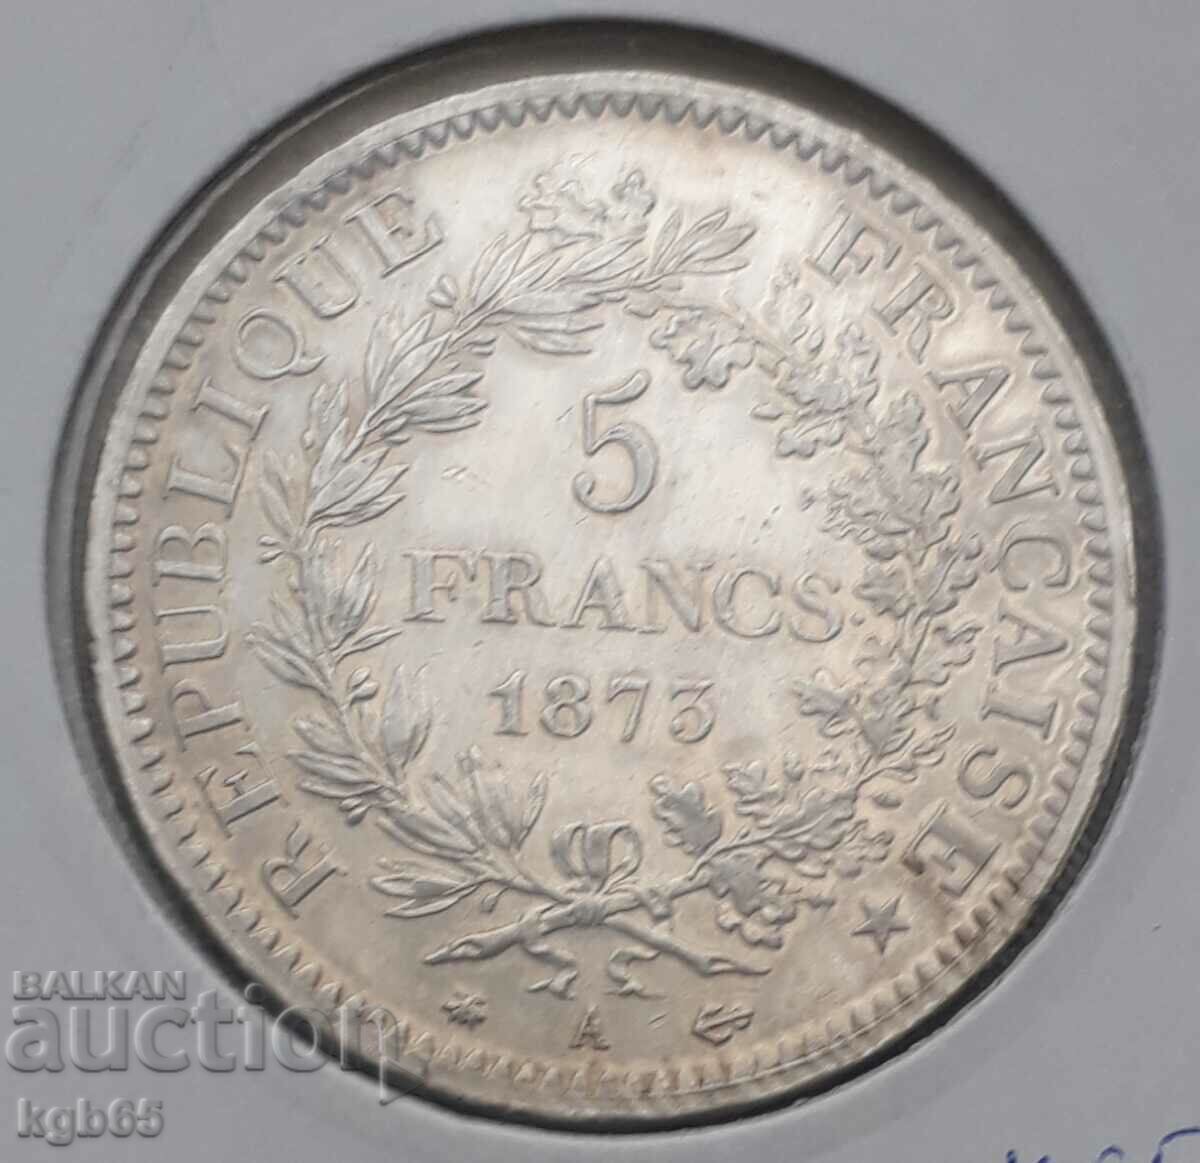 5 francs 1873. France. Super quality.